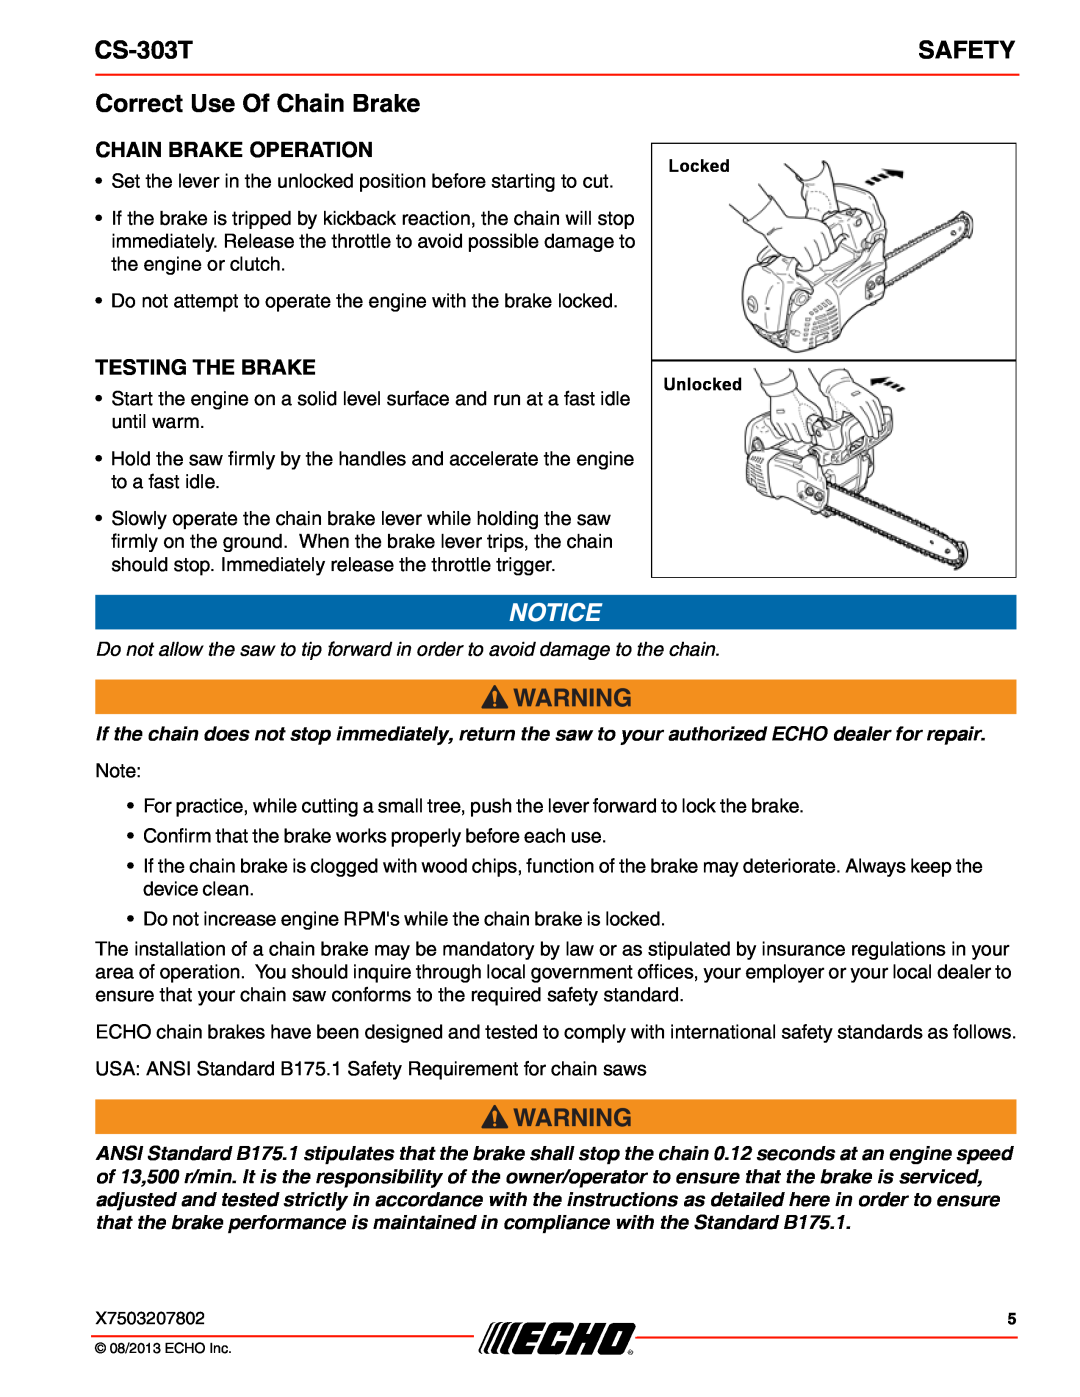 Echo CS-303T instruction manual Correct Use Of Chain Brake, Safety, Chain Brake Operation, Testing The Brake 